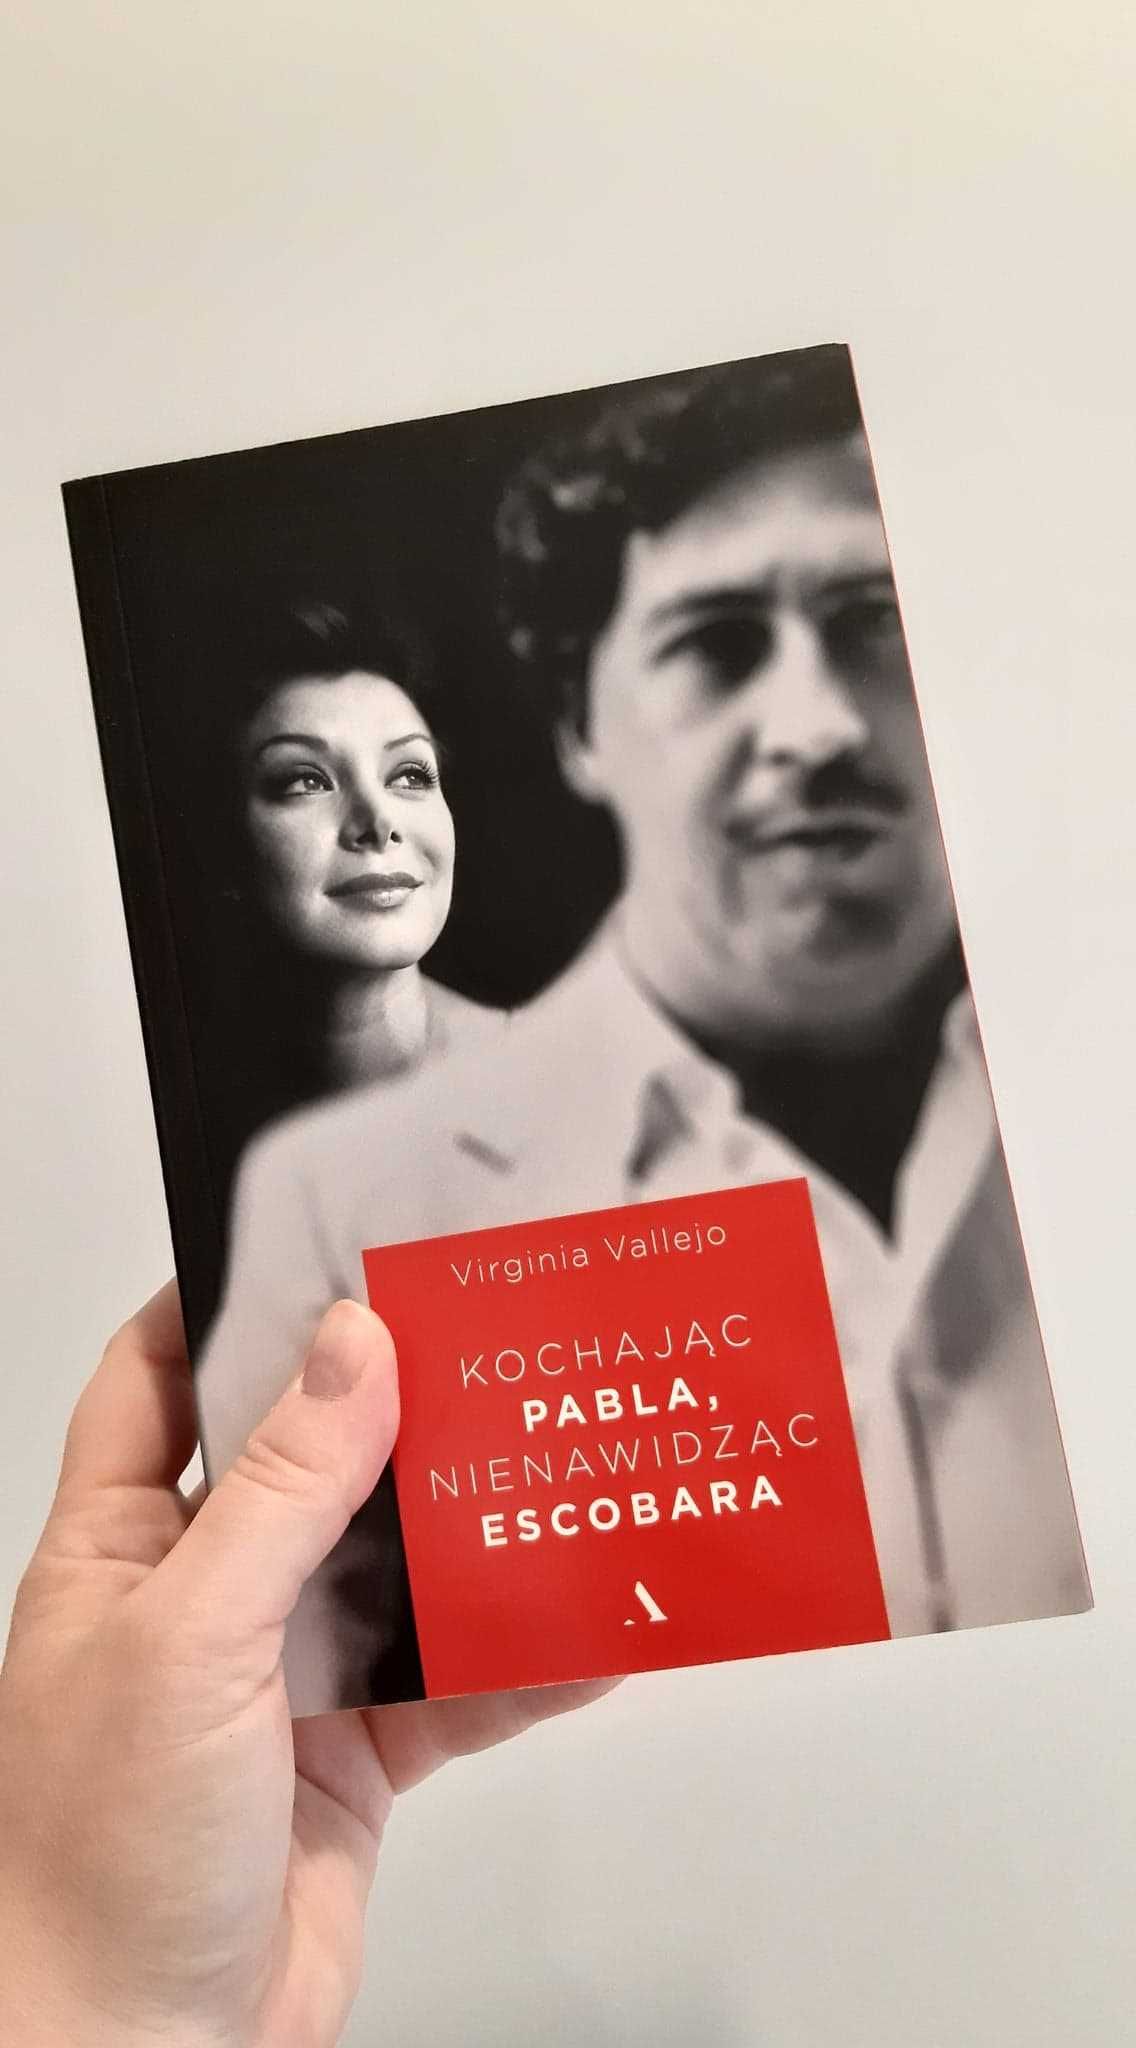 Virginia Vallejo "Kochając Pabla, nienawidząc Escobara"